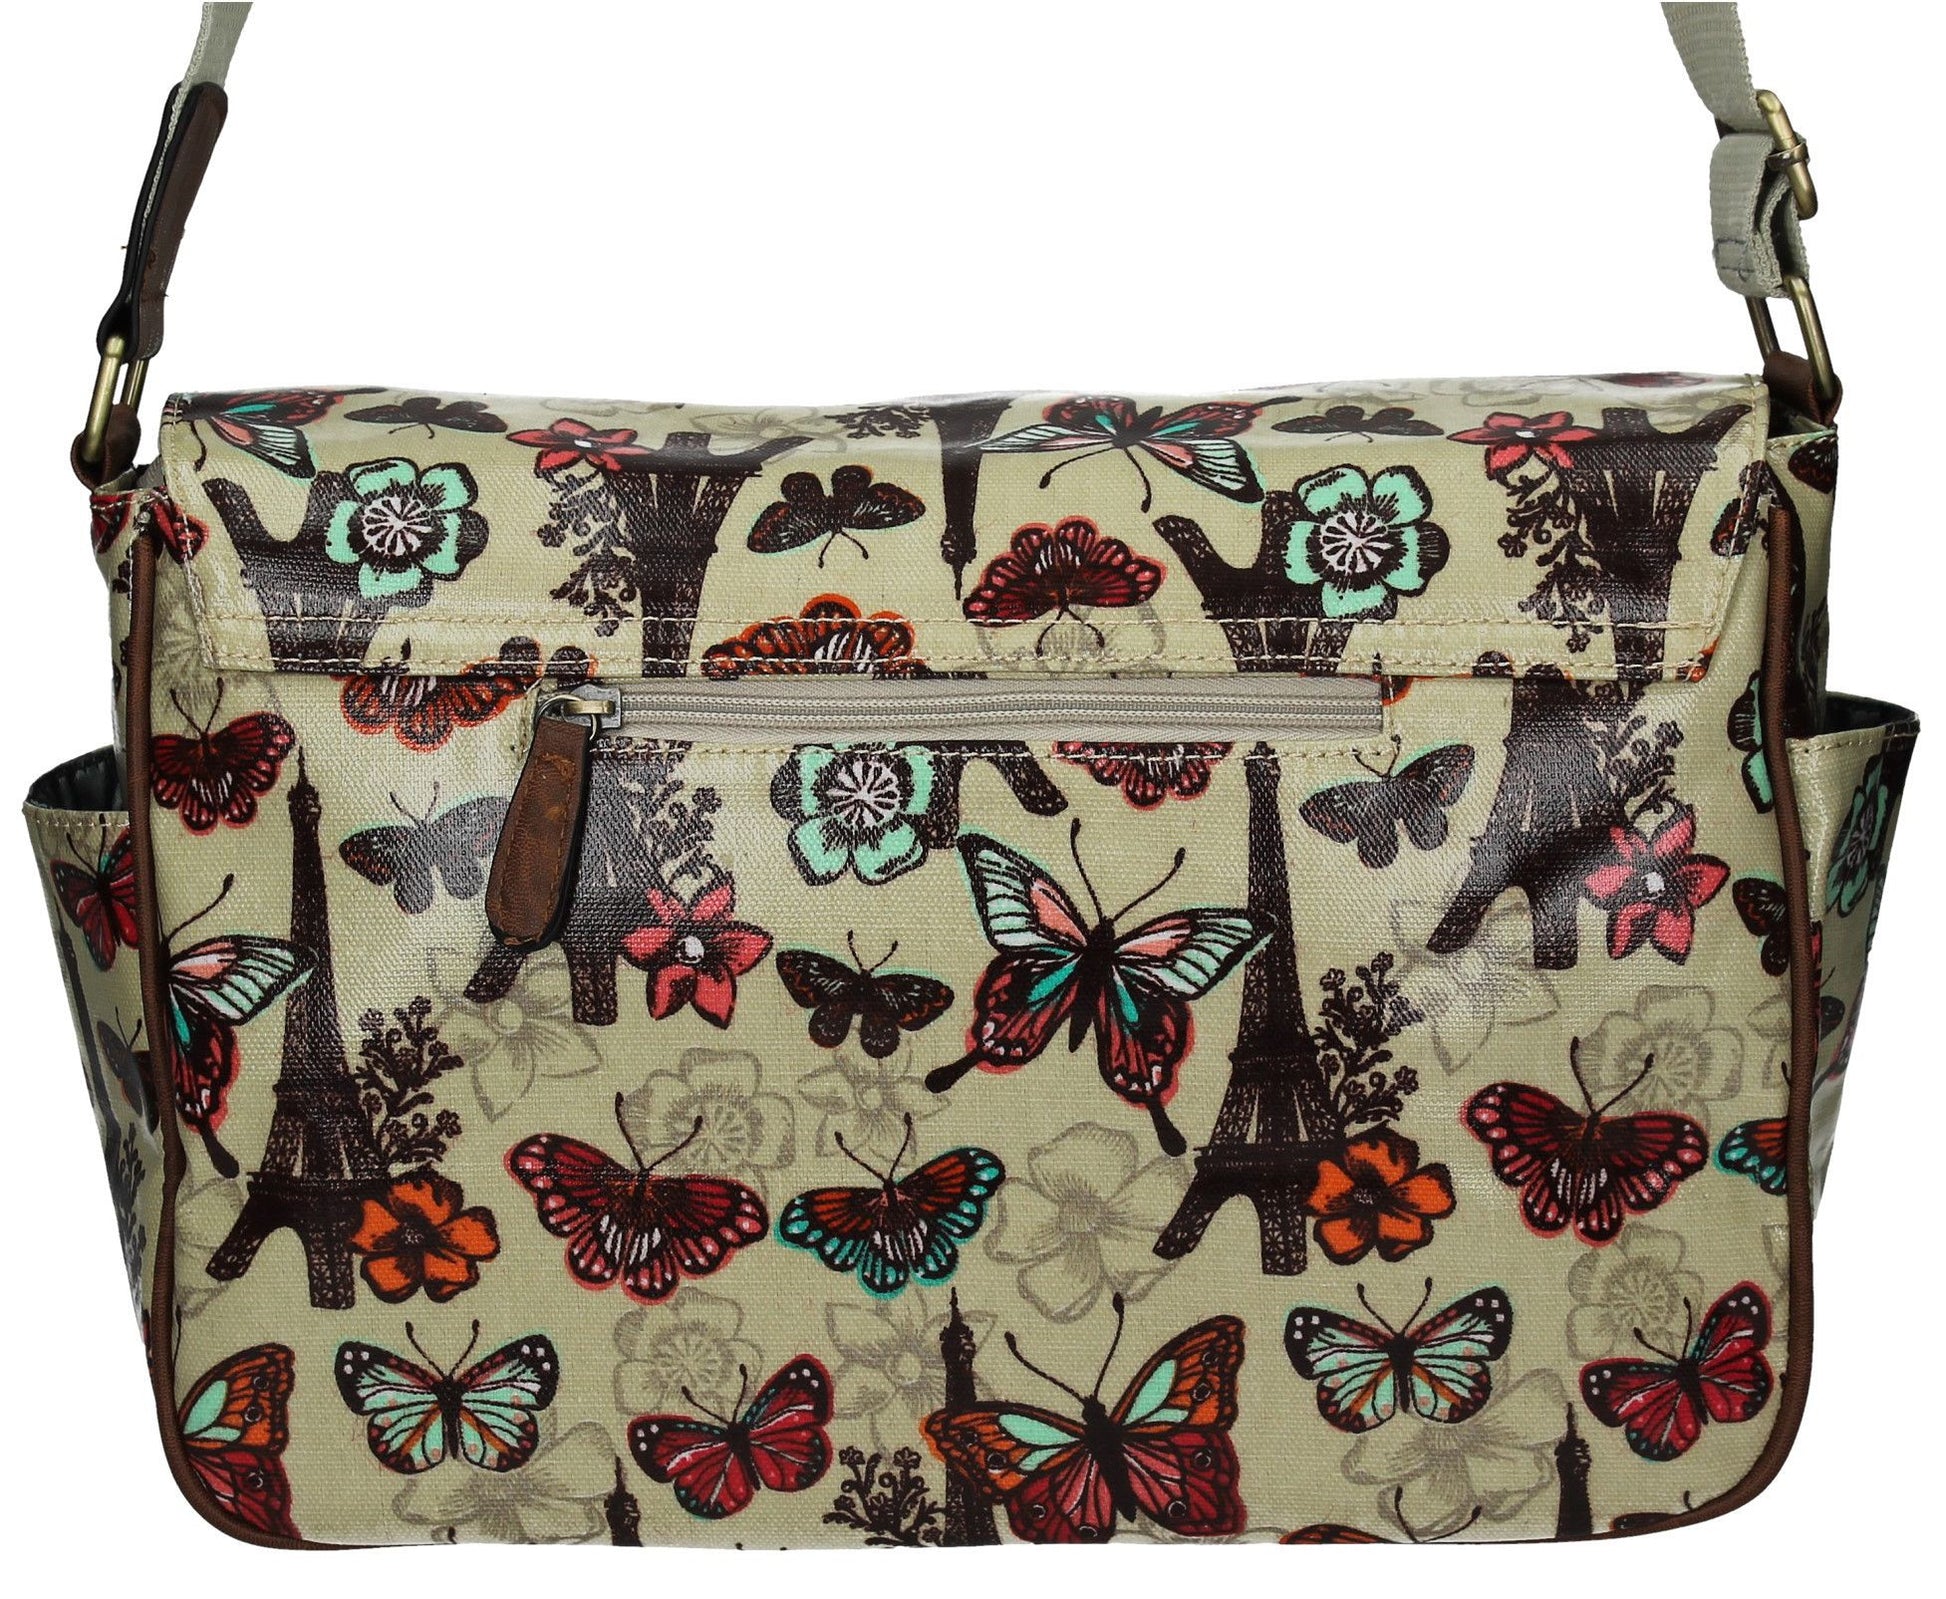 Swanky Swans Noel Paris Butterfly Classy Womens Satchel Bag SWANKYSWANS Perfect for Back to school!